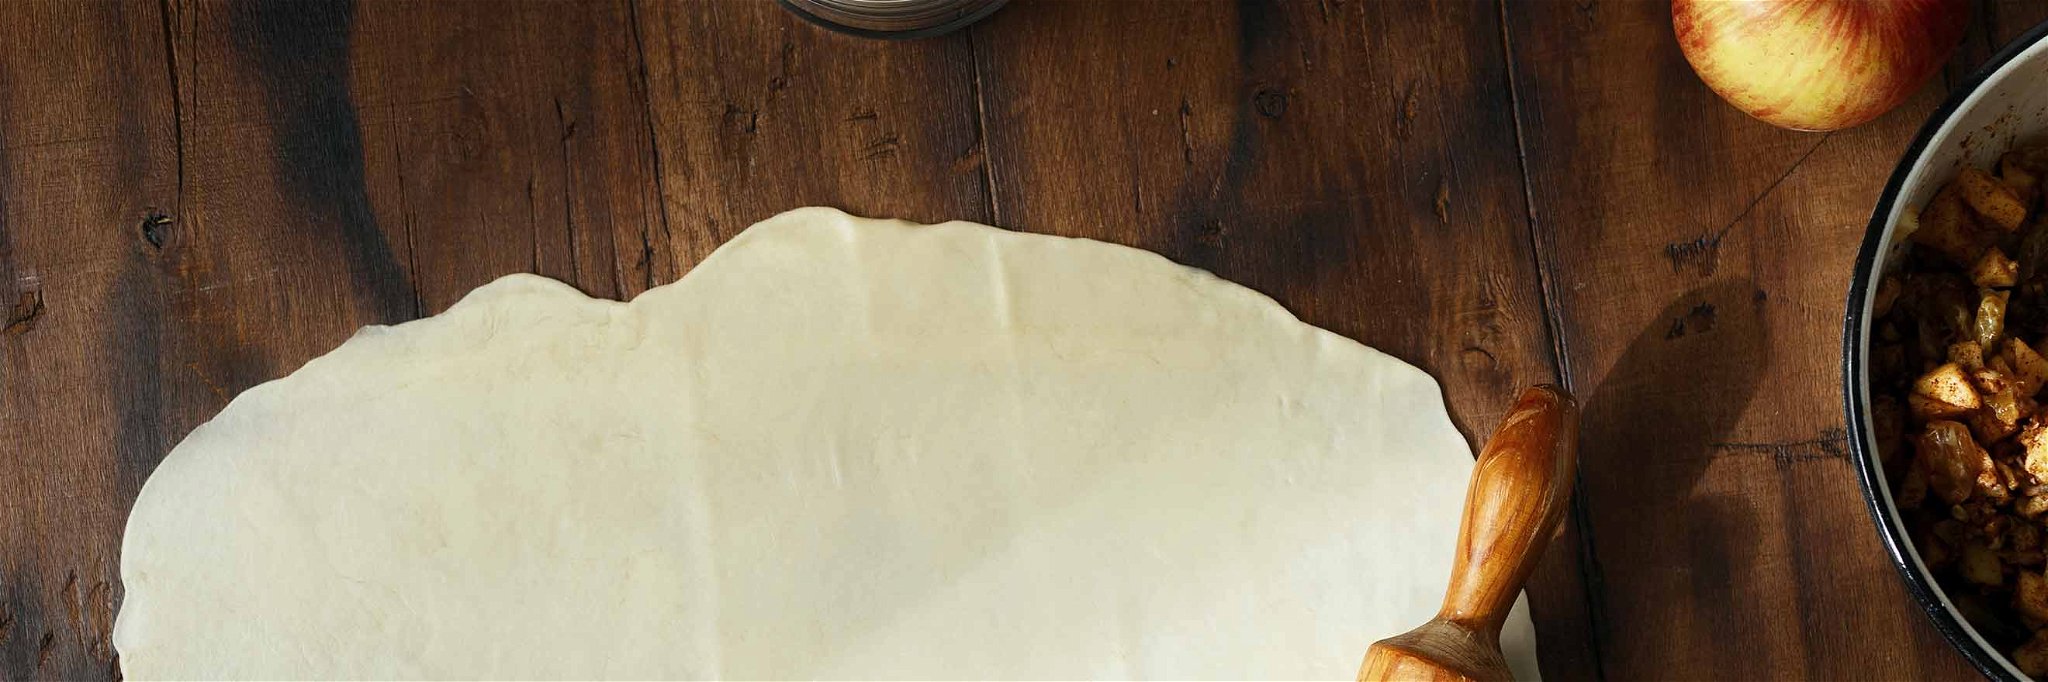 Basic Strudel Dough